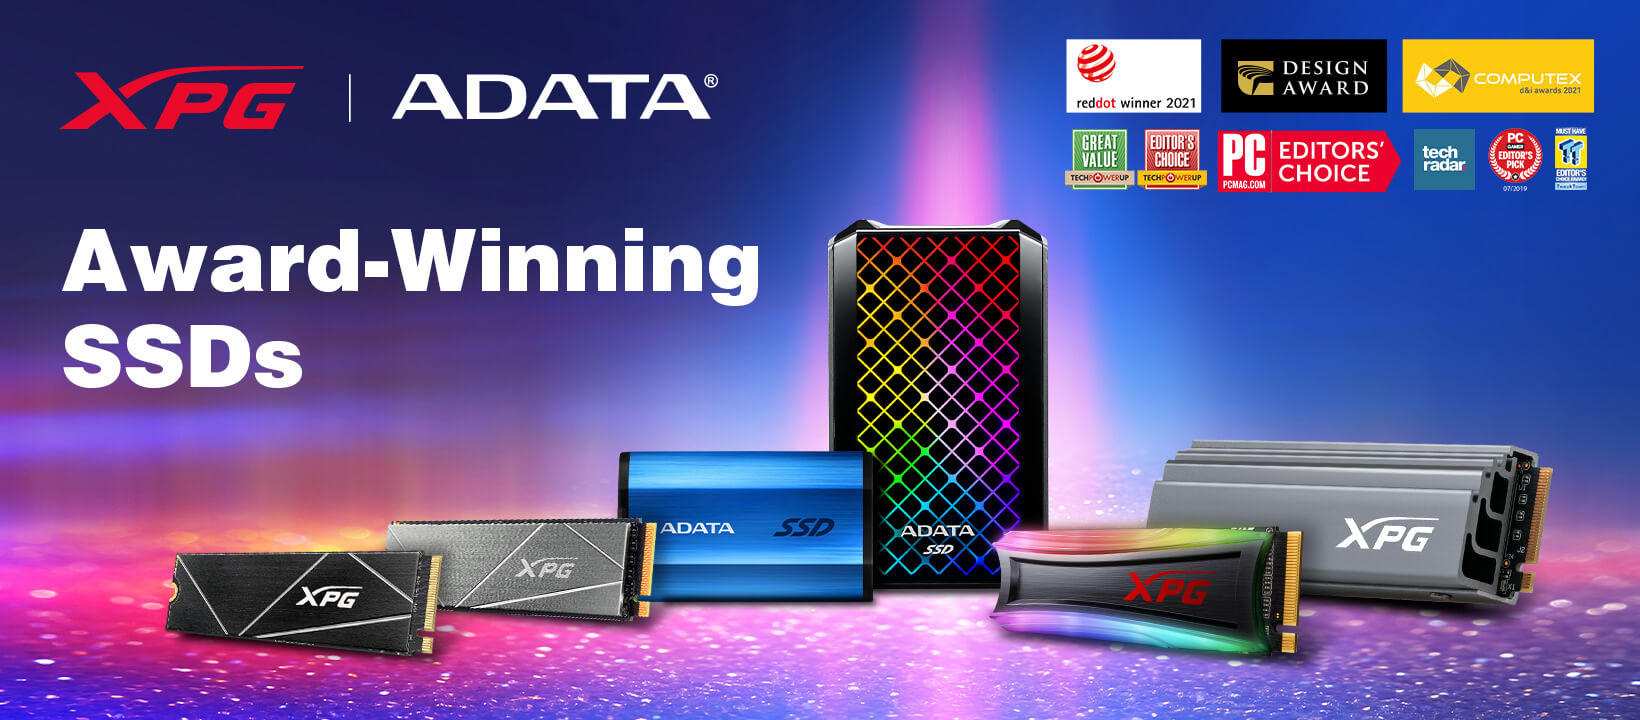 ADATA Award-Winning SSDs